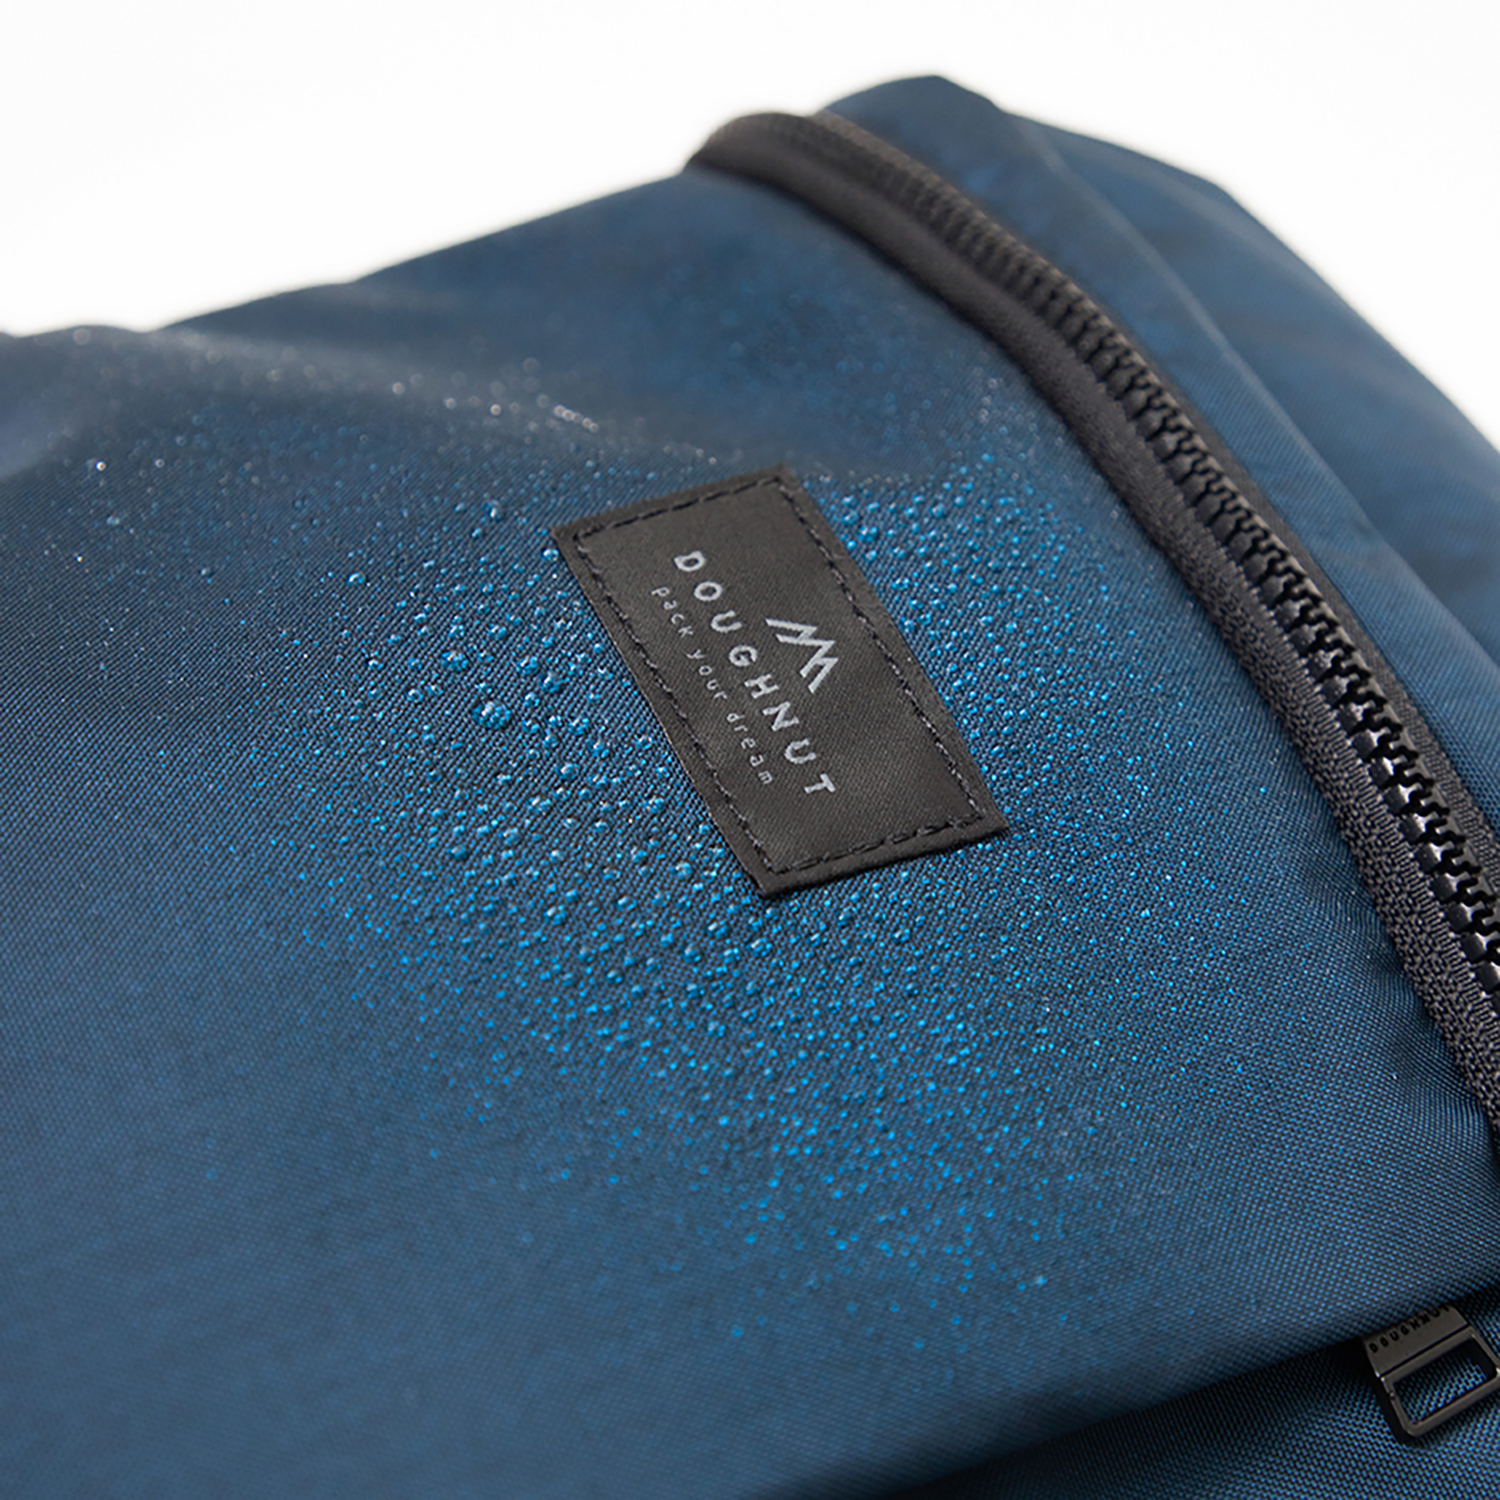 Design Brand  DOUGHNUT】Absorb — Ocean Power — Pacific Blue